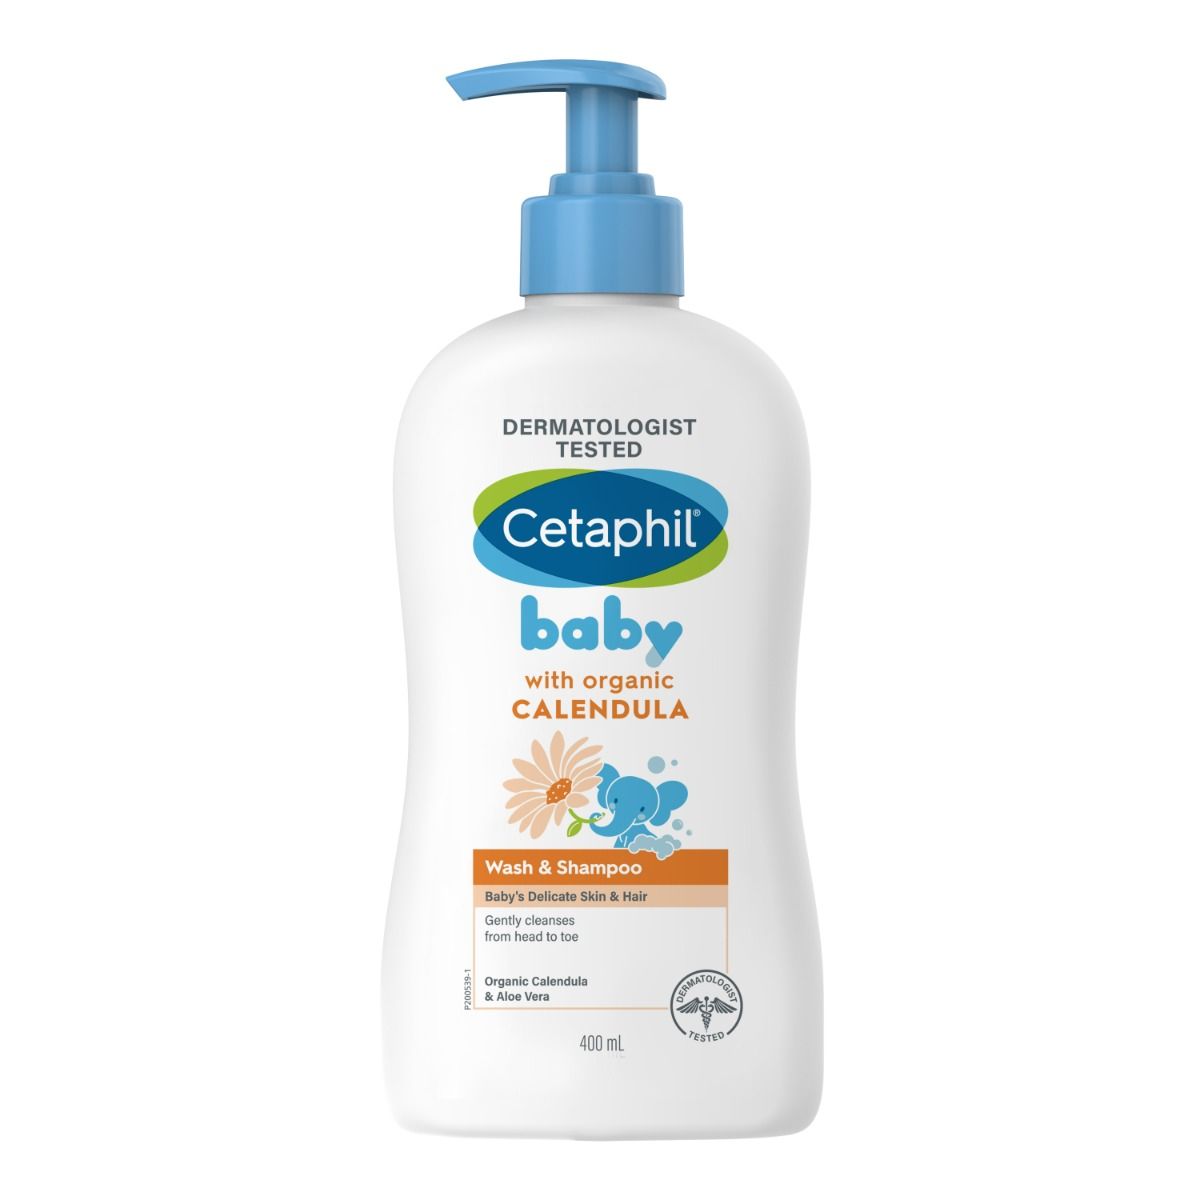 Cetaphil Baby Wash & Shampoo with Organic Calendula, 400 ml, Pack of 1 